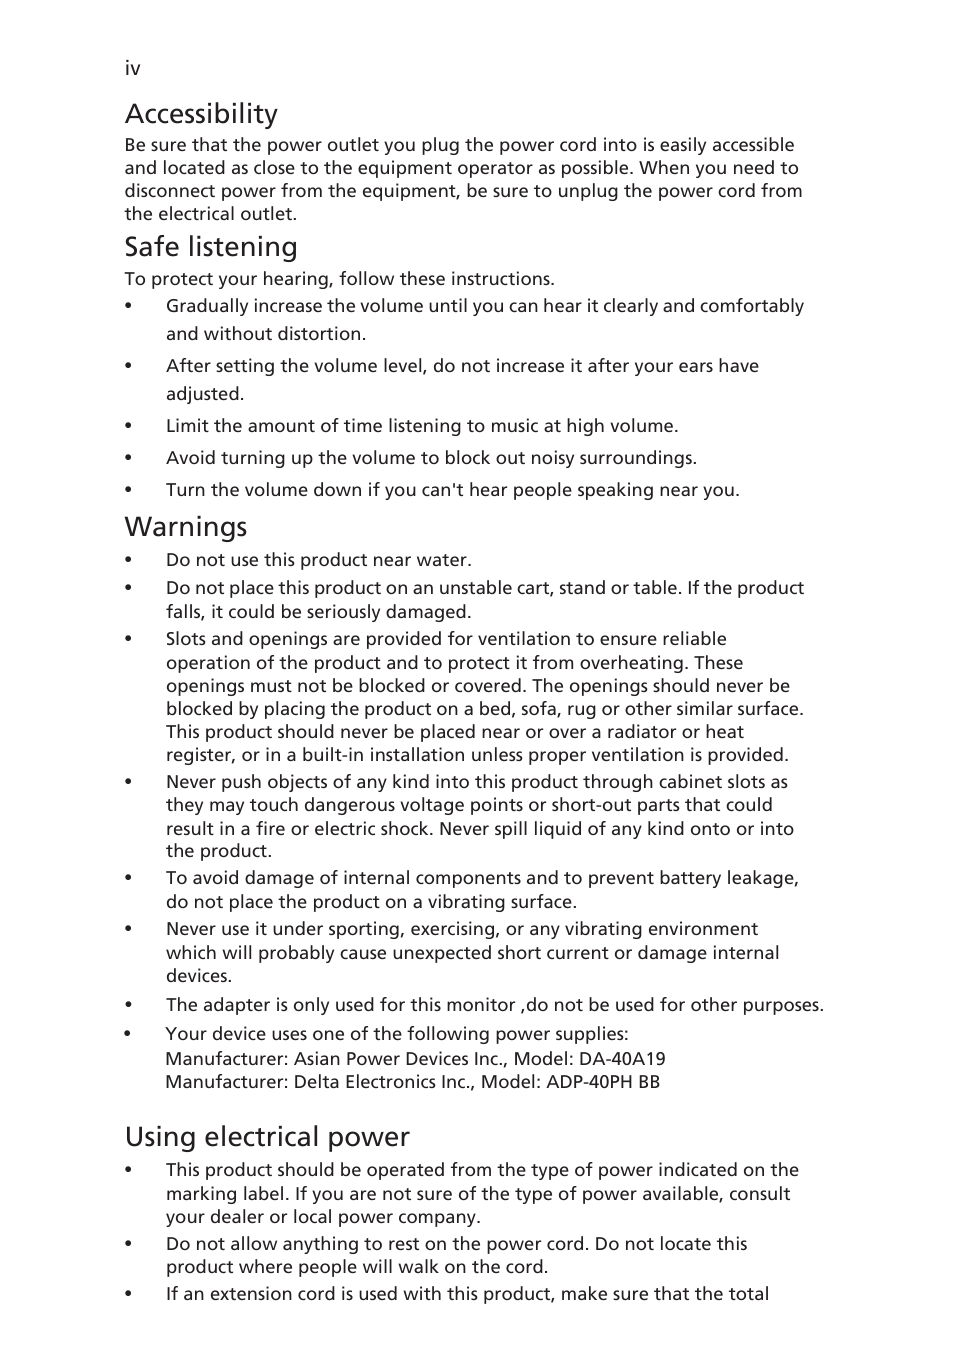 Accessibility, Safe listening, Warnings | Acer G246HL User Manual